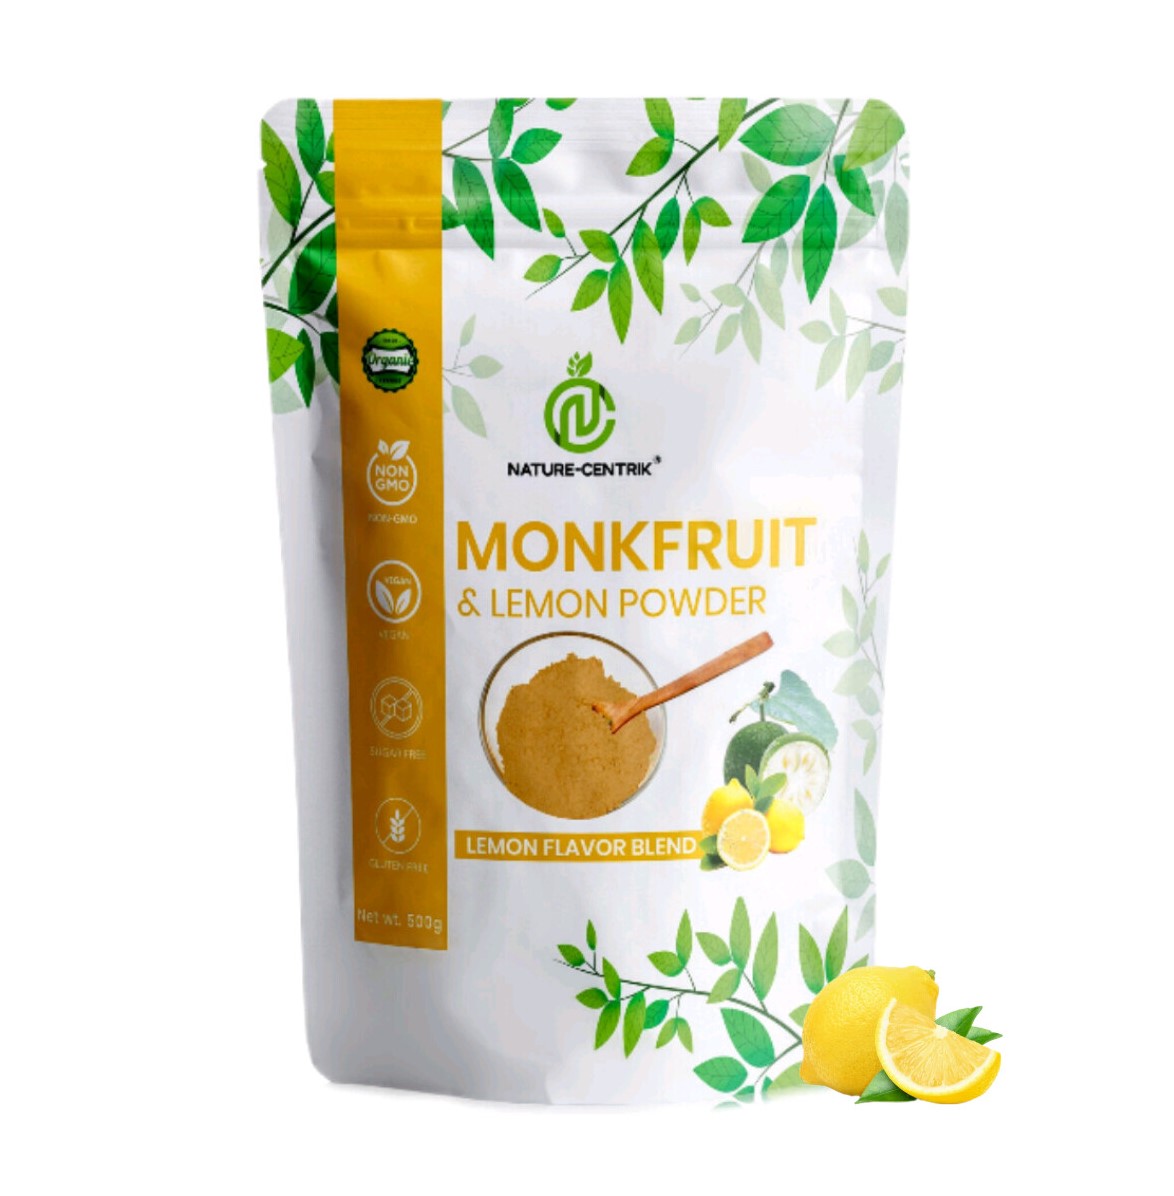 Nature-Centrik Monk Fruit &amp; Lemon Powder - Pure from Real Fruit, Zero Sugar, No Erythritol, Delicious Natural Sweetener